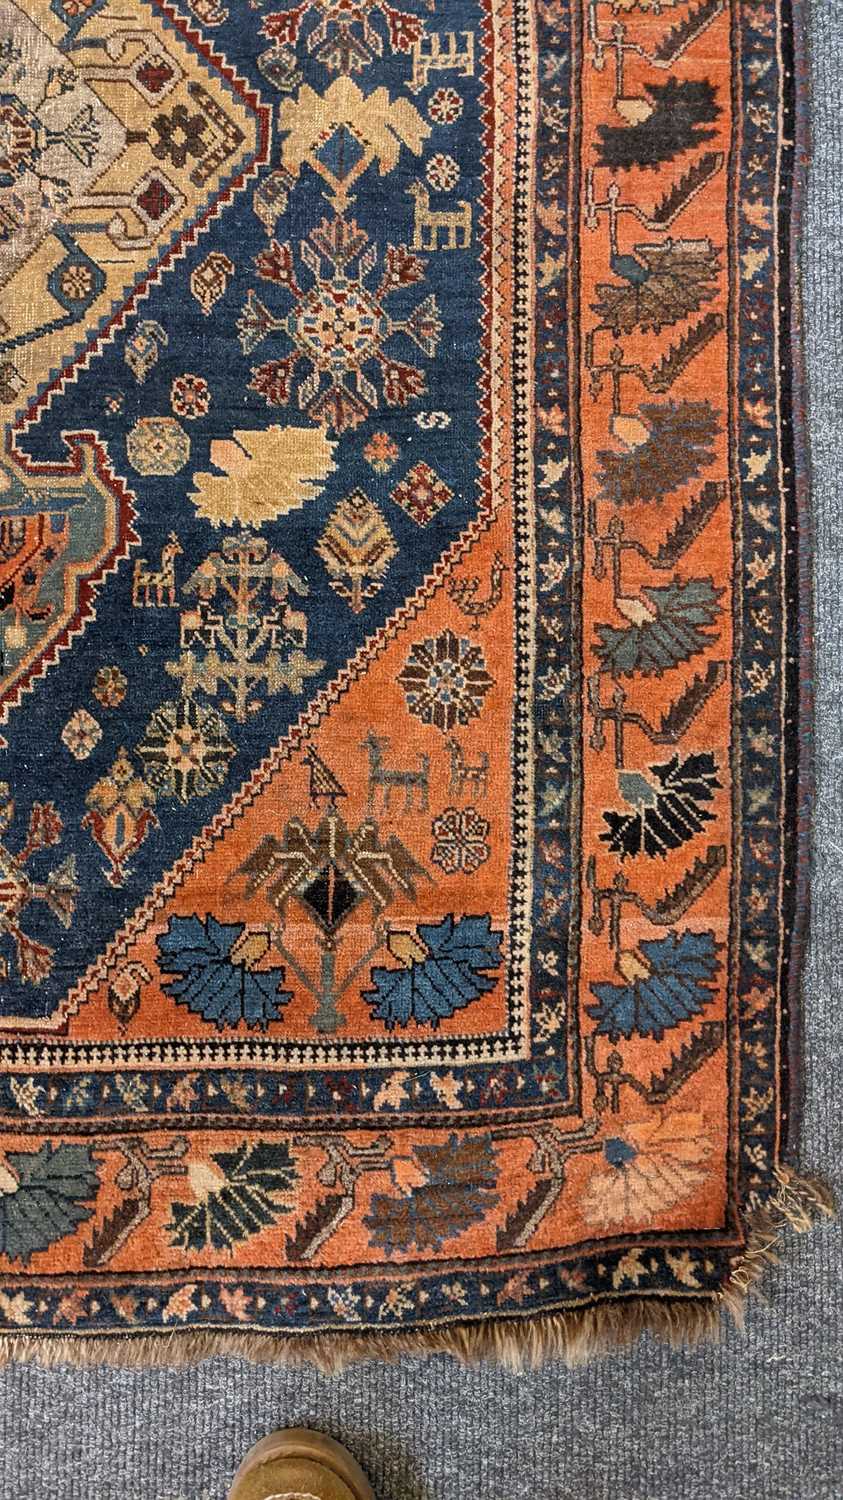 An Afghan Beshir rug, - Image 7 of 17